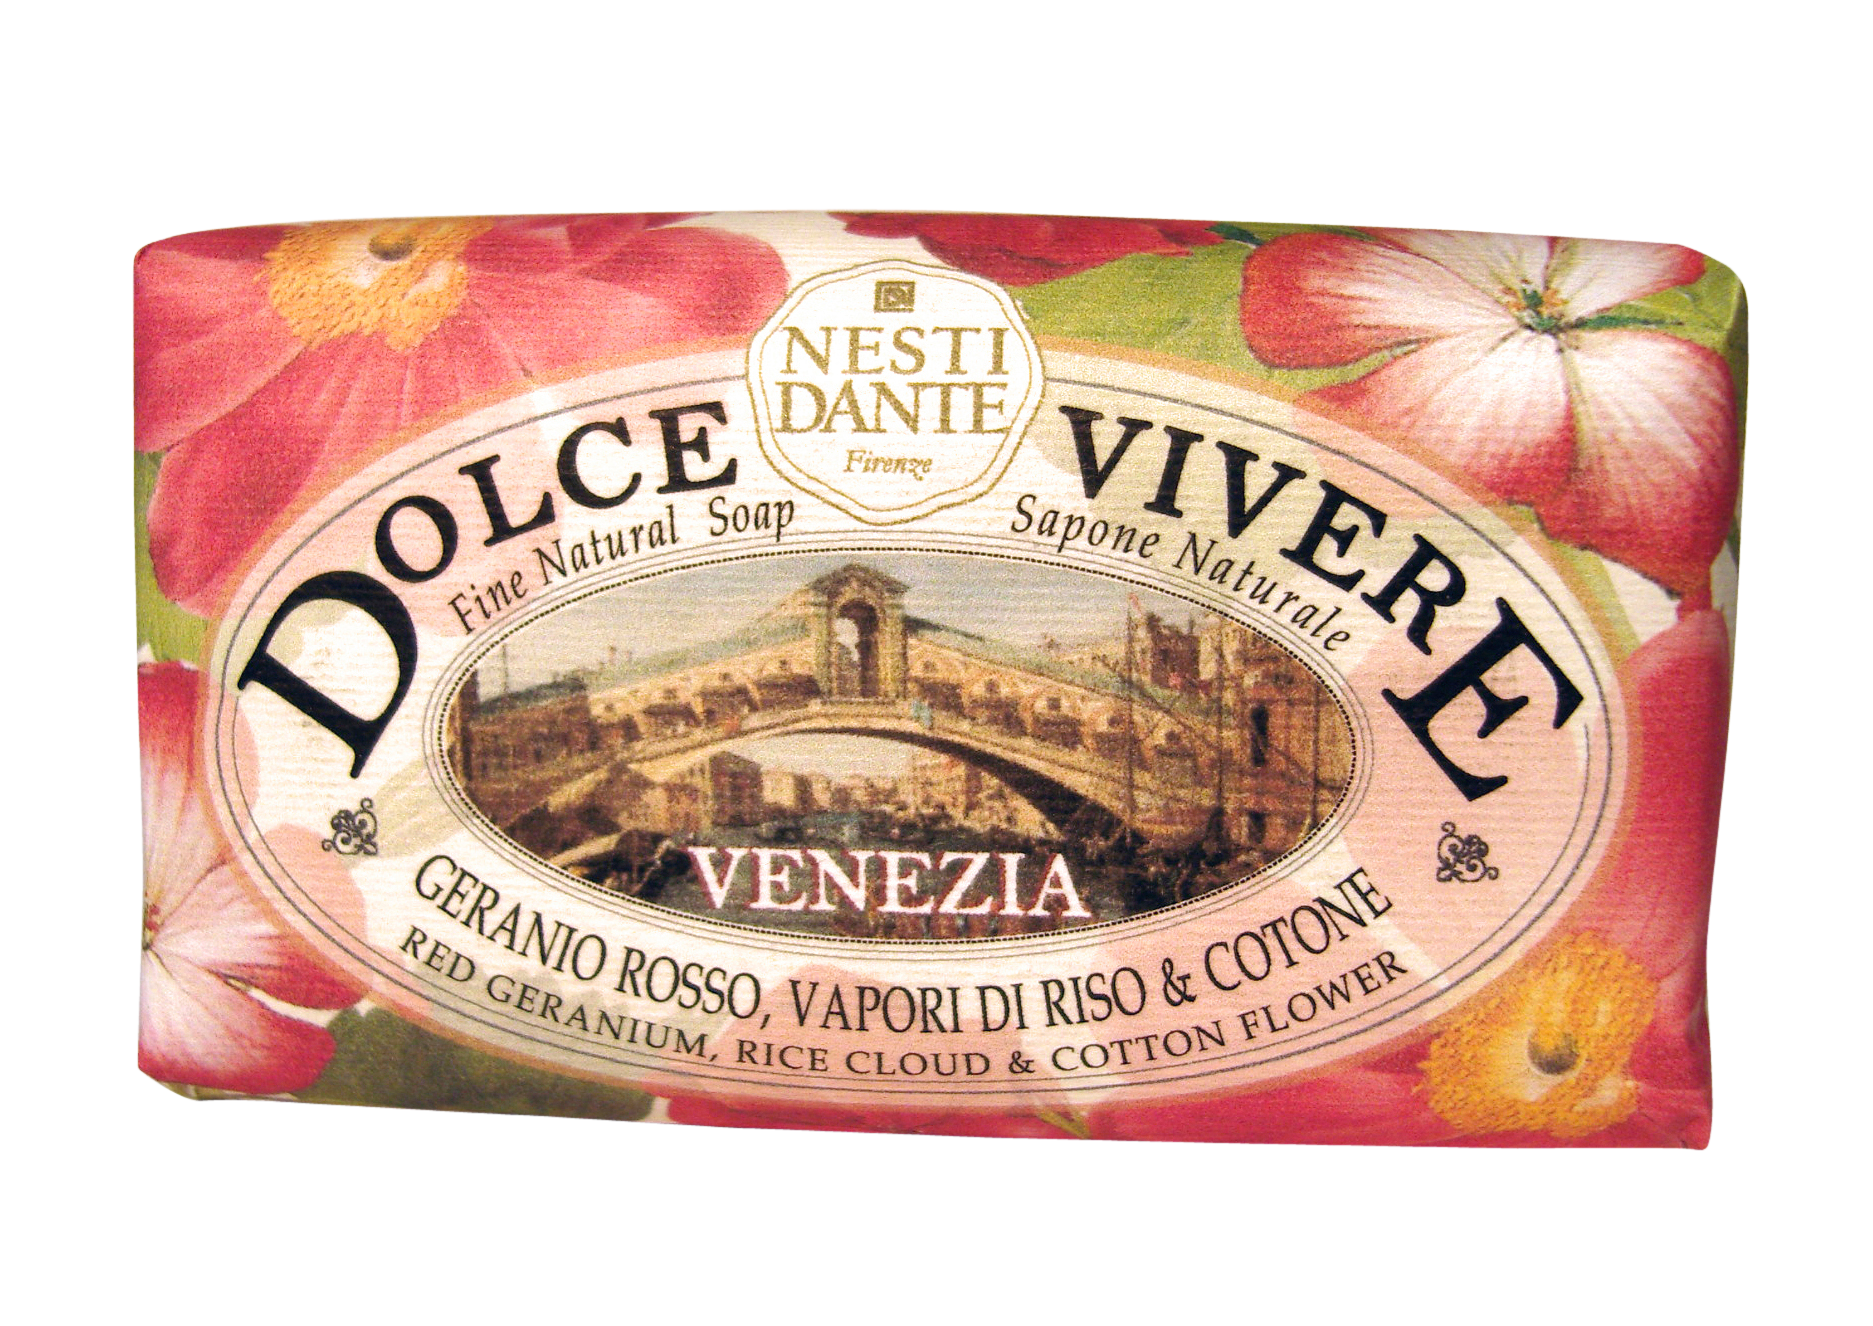 Нести данте купить. Nesti Dante Dolce vivere natural Soap ROMA мыло натуральное с ароматом Рим 250 гр. Мыло Nesti Dante Венеция 250г. Nesti Dante Dolce vivere natural Soap Firenze мыло натуральное с ароматом Флоренция 250. Нести Данте мыло 125 г.